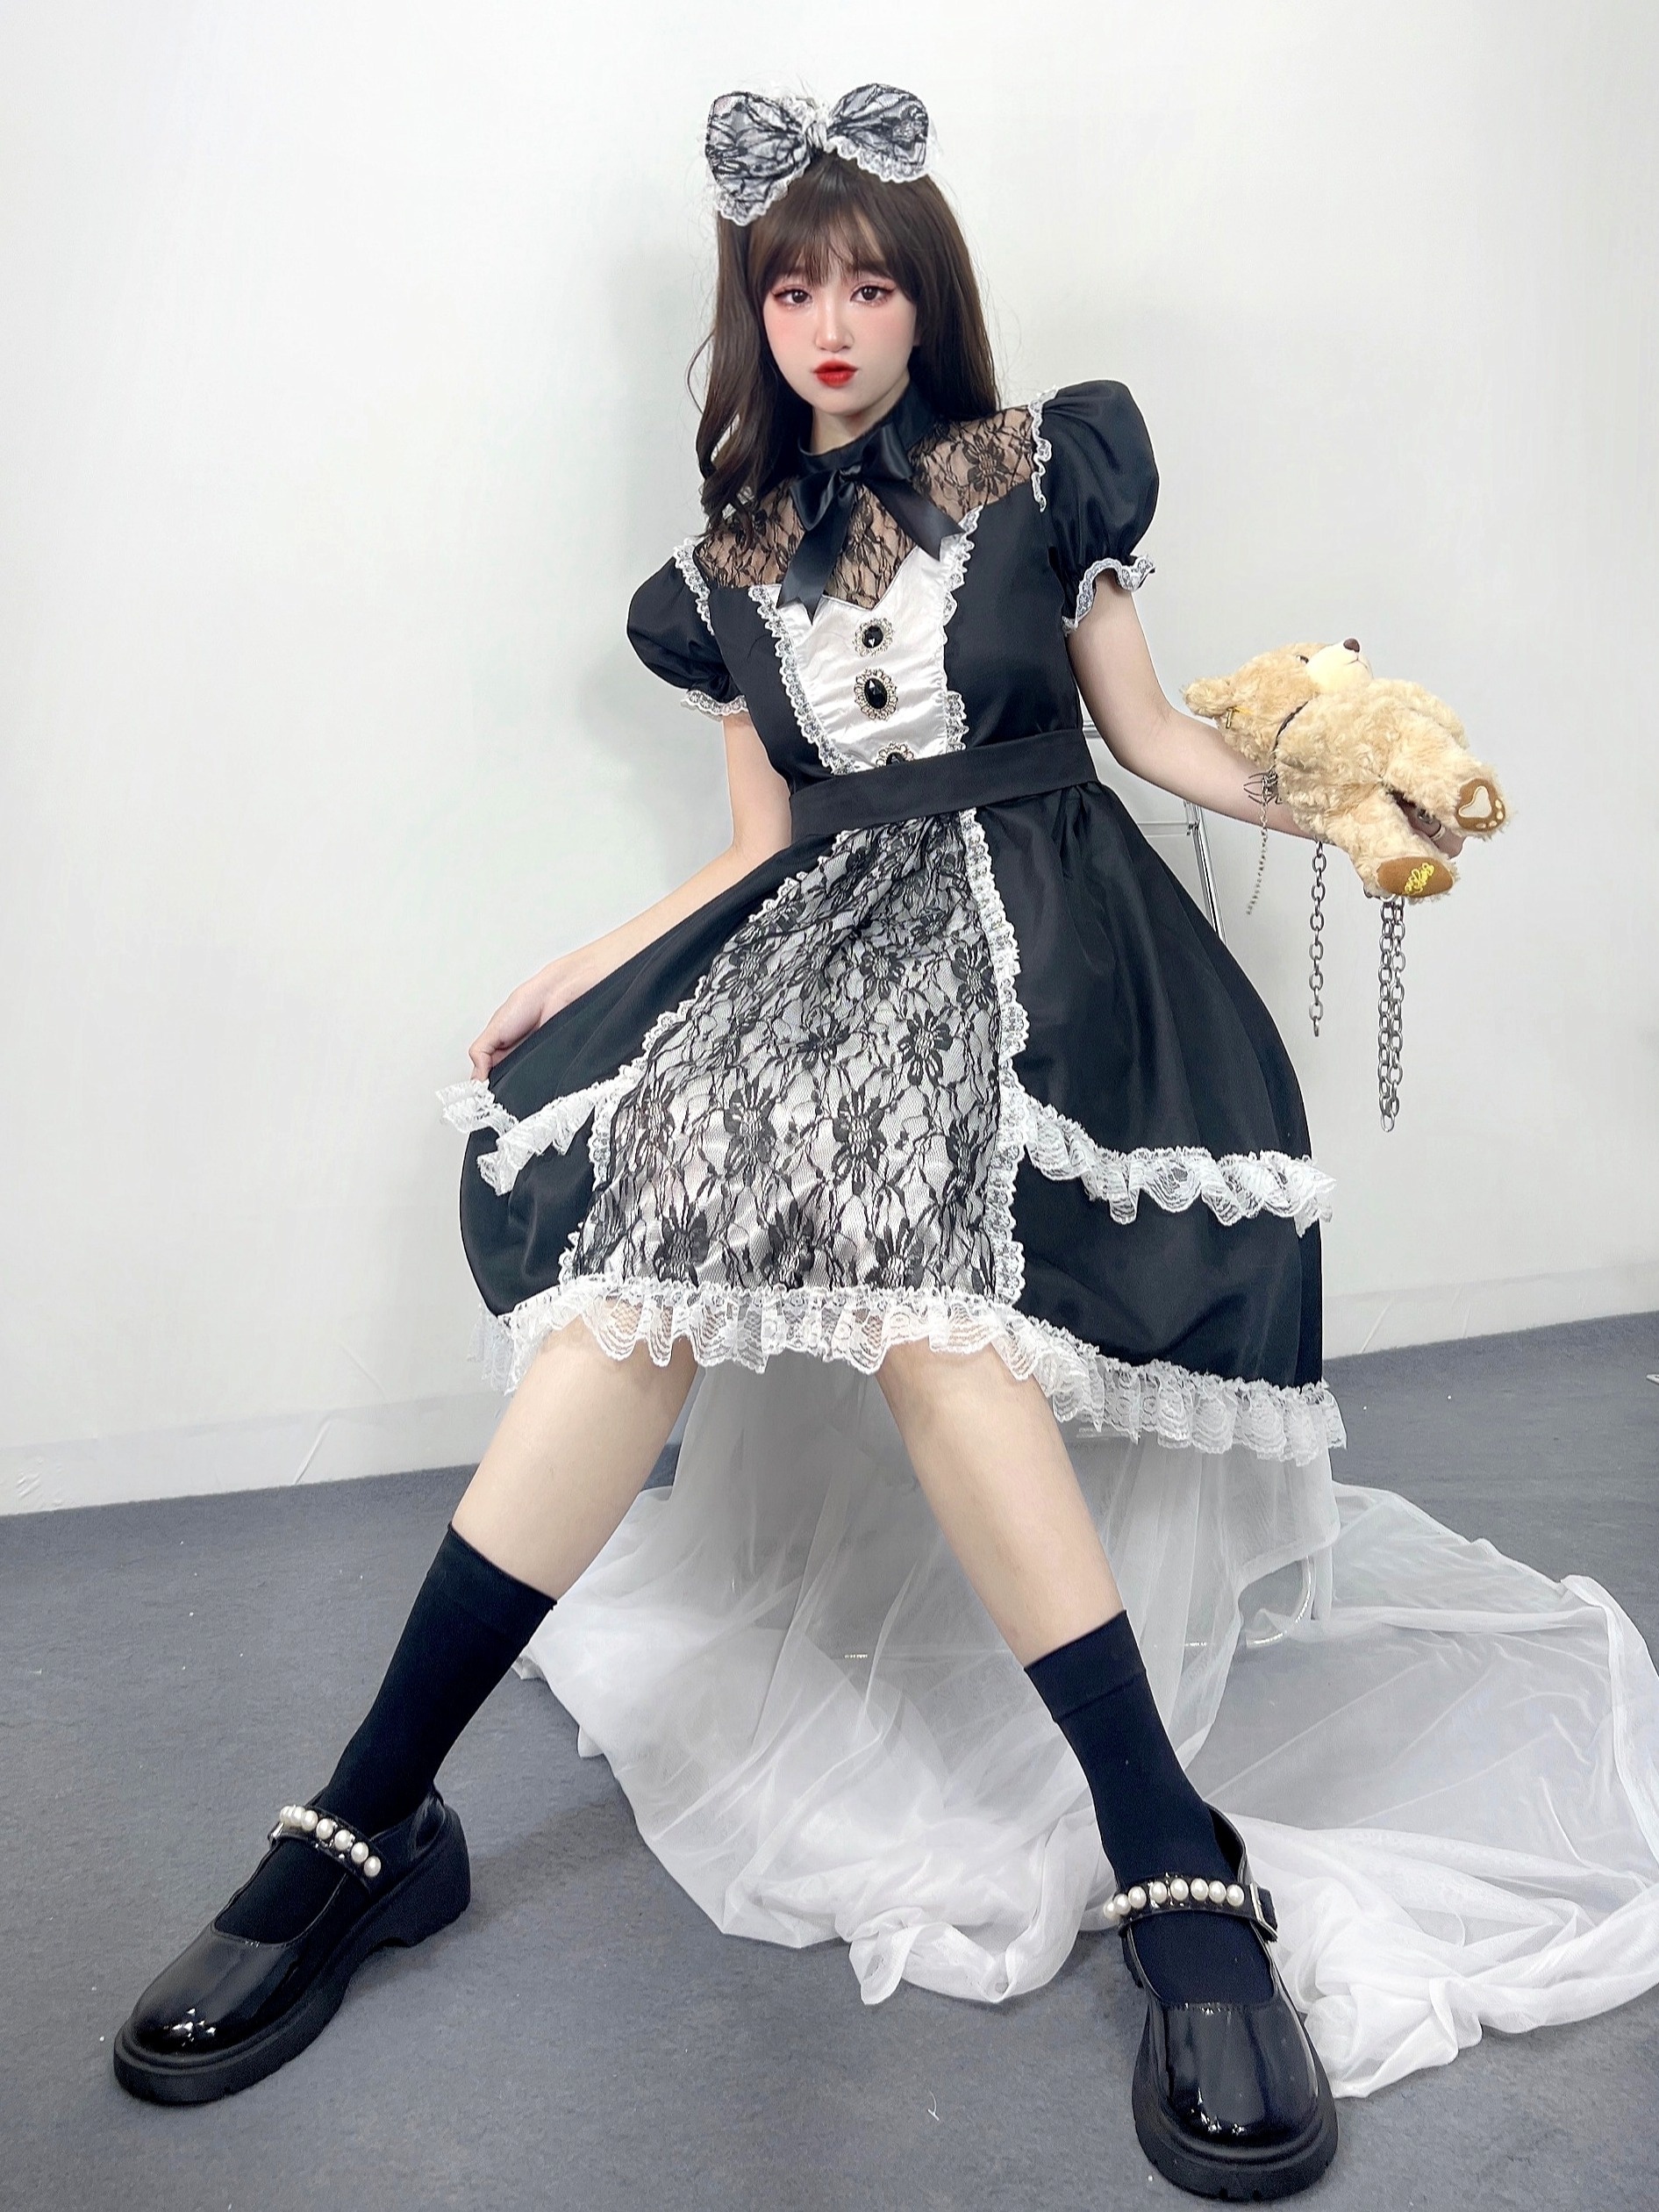 Women Girls Lolita Dress Japanese Kawaii Ruffle Bowknot Sweet Plaid Check